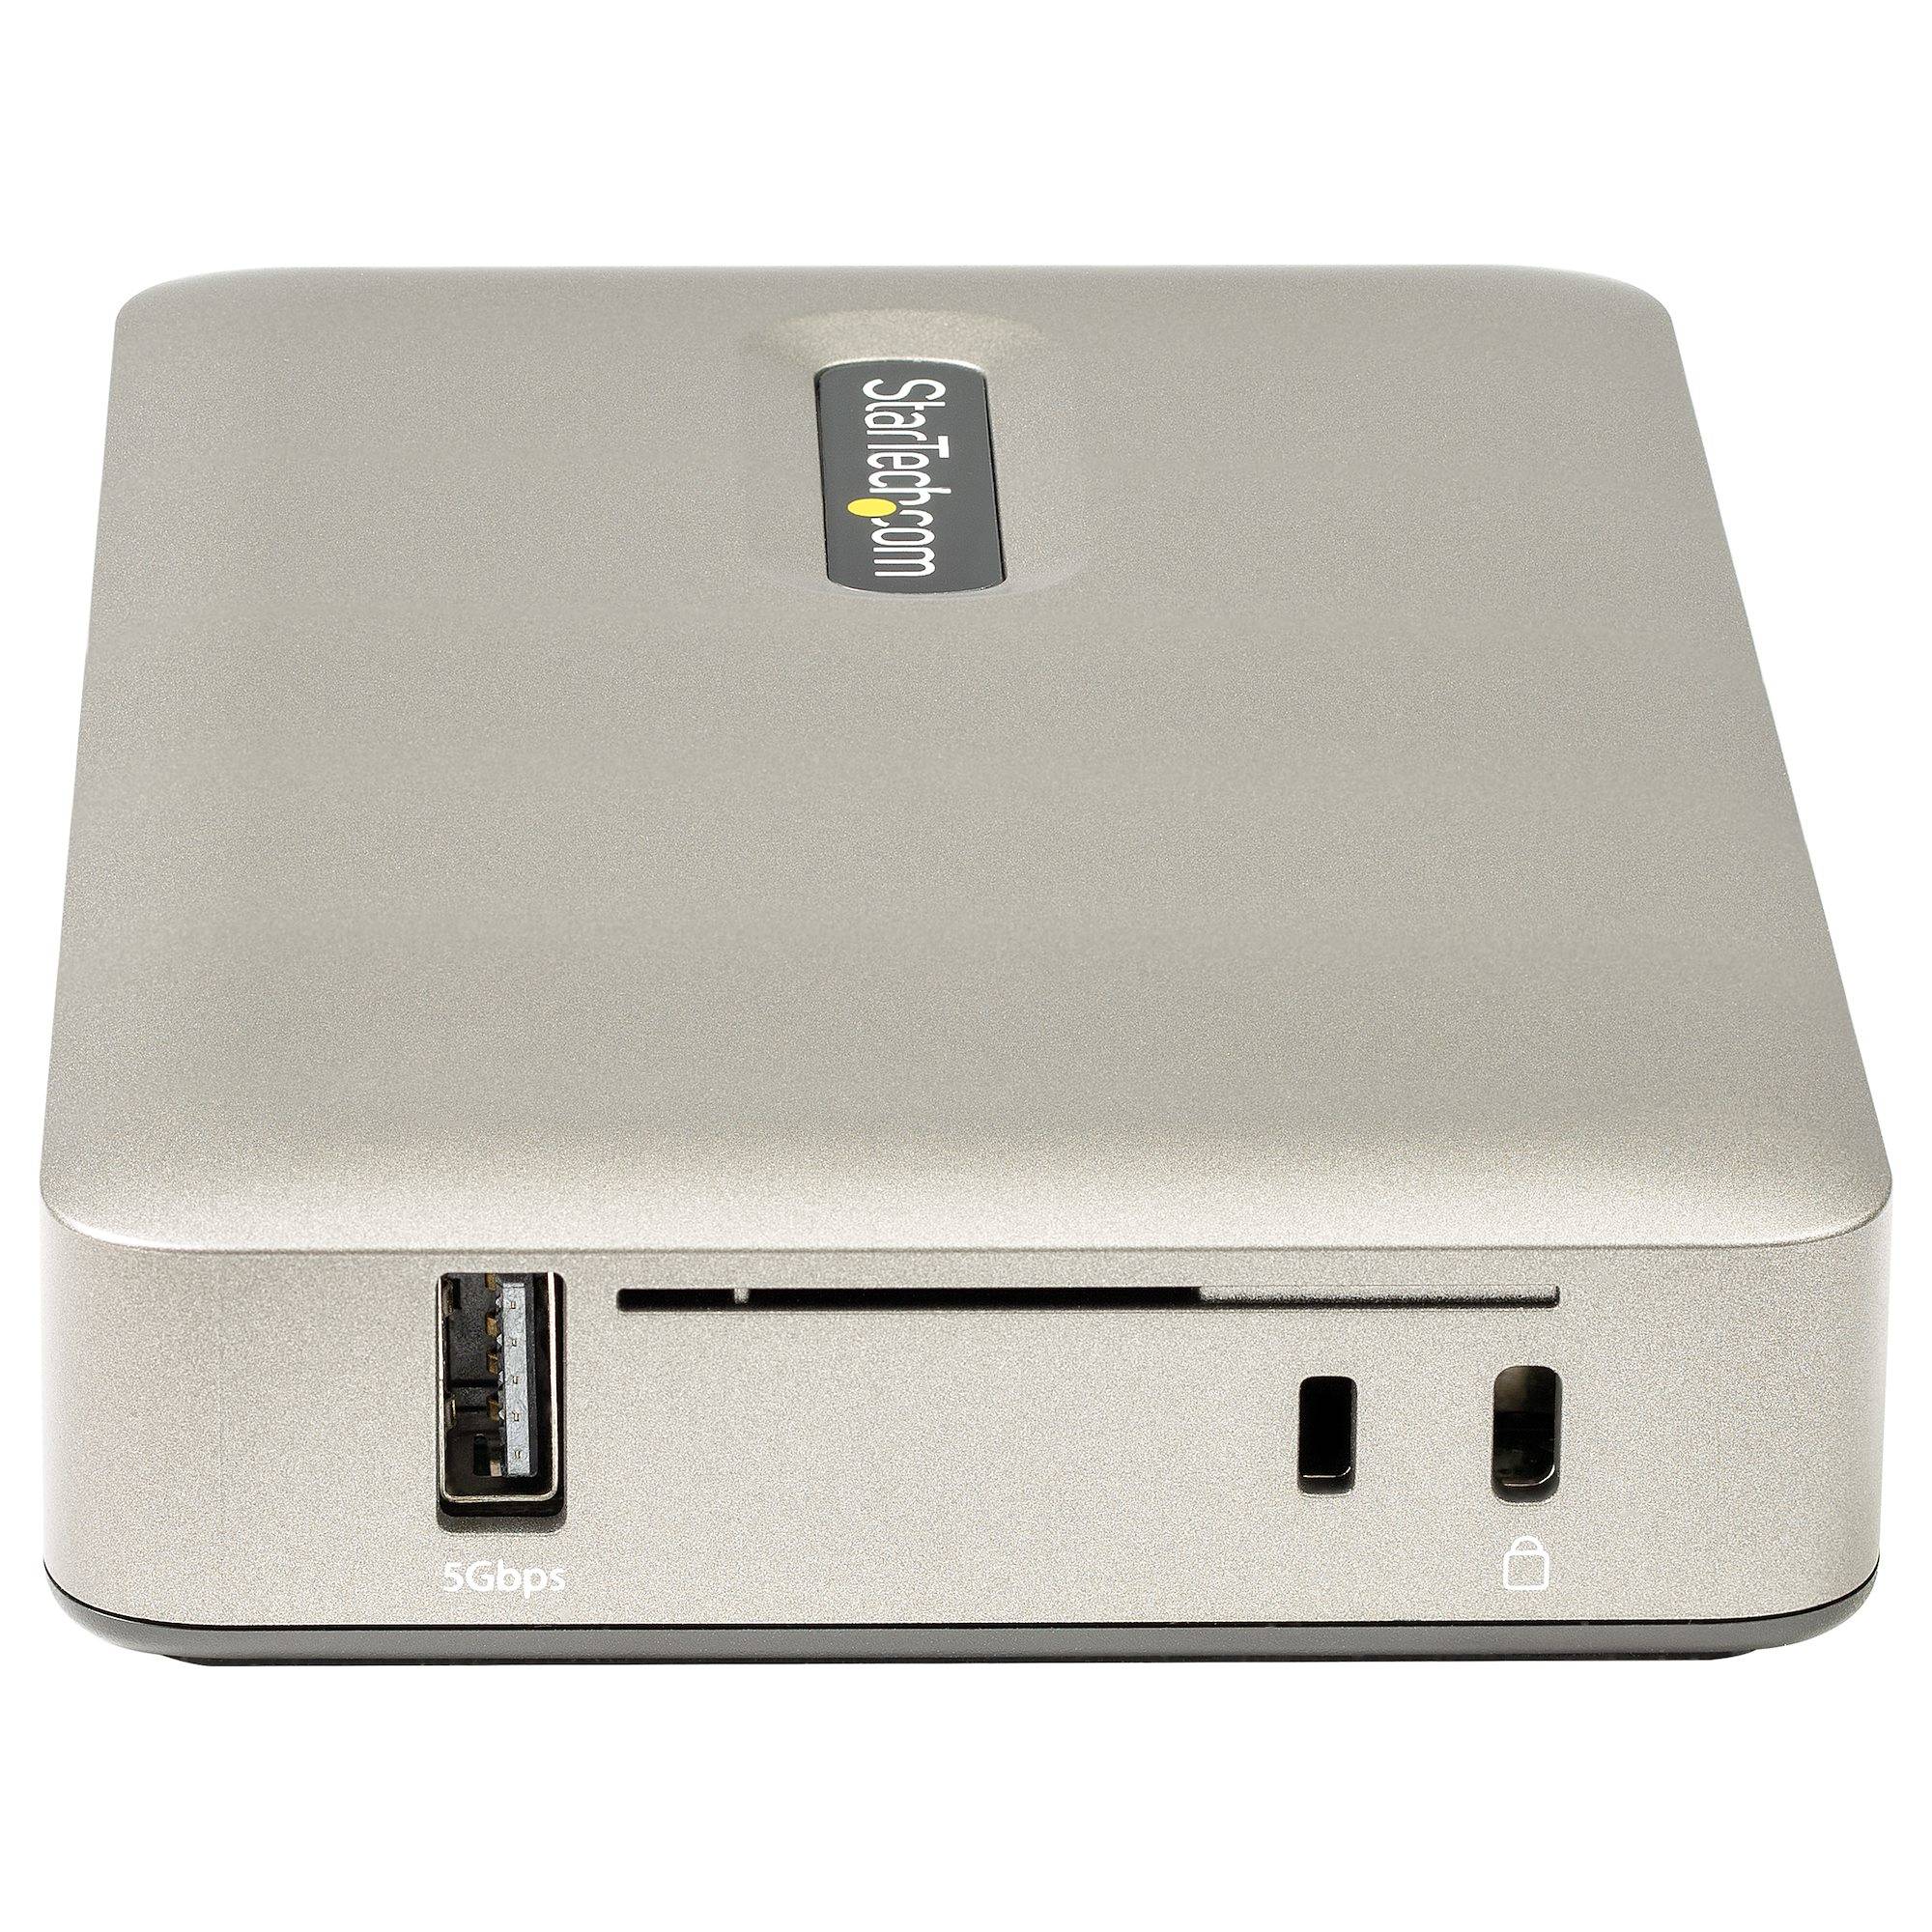 Rca Informatique - image du produit : USB C DOCK DISPLAYPORT 4K 30HZ OR VGA/65W PD/4-PORT USB HUB/GBE